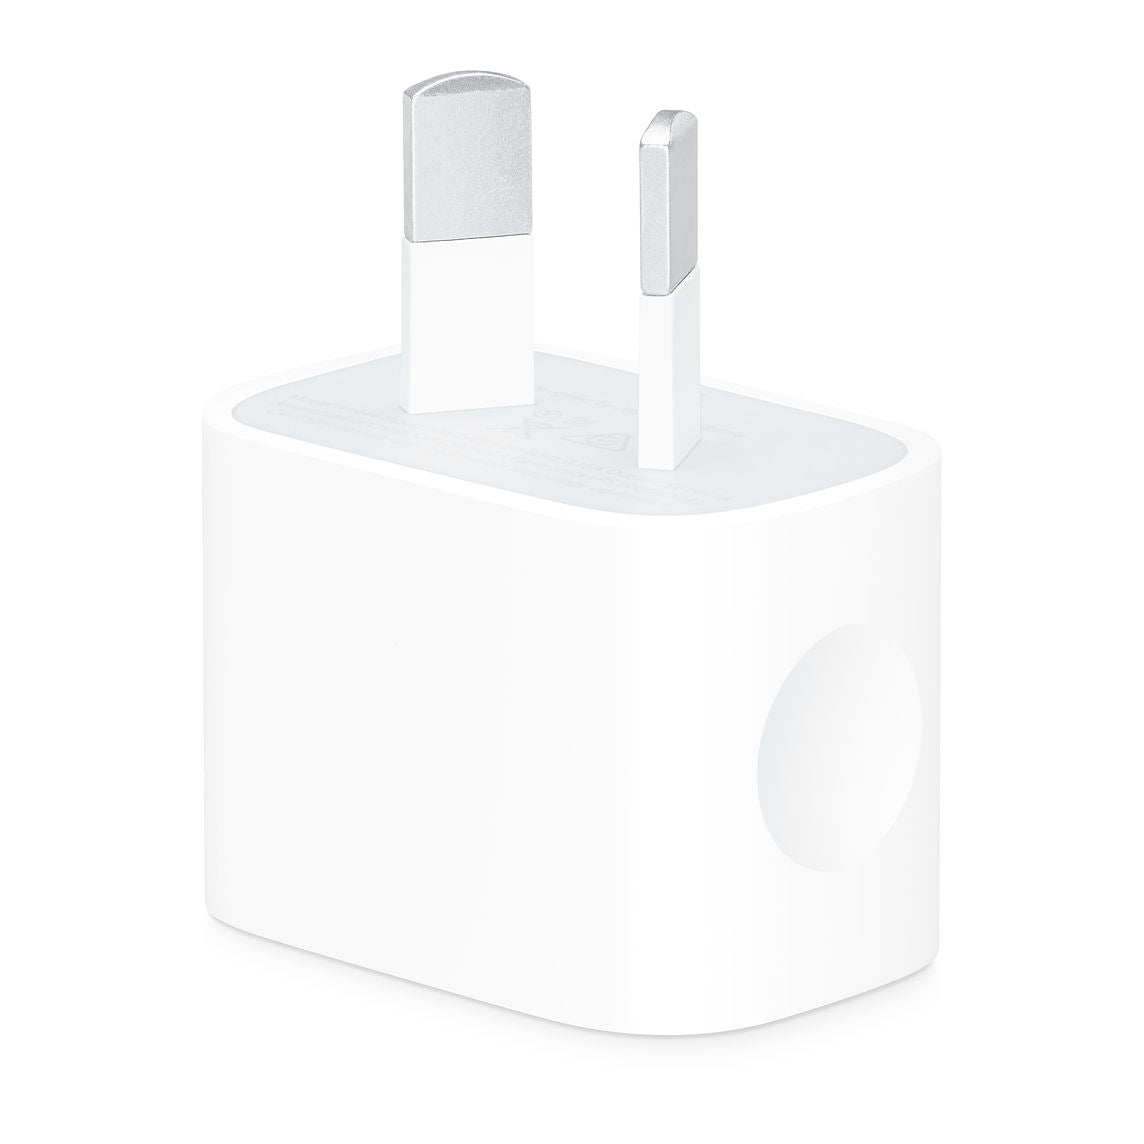 iPhone/iPad charger 5W USB Power Adapter - Glowish